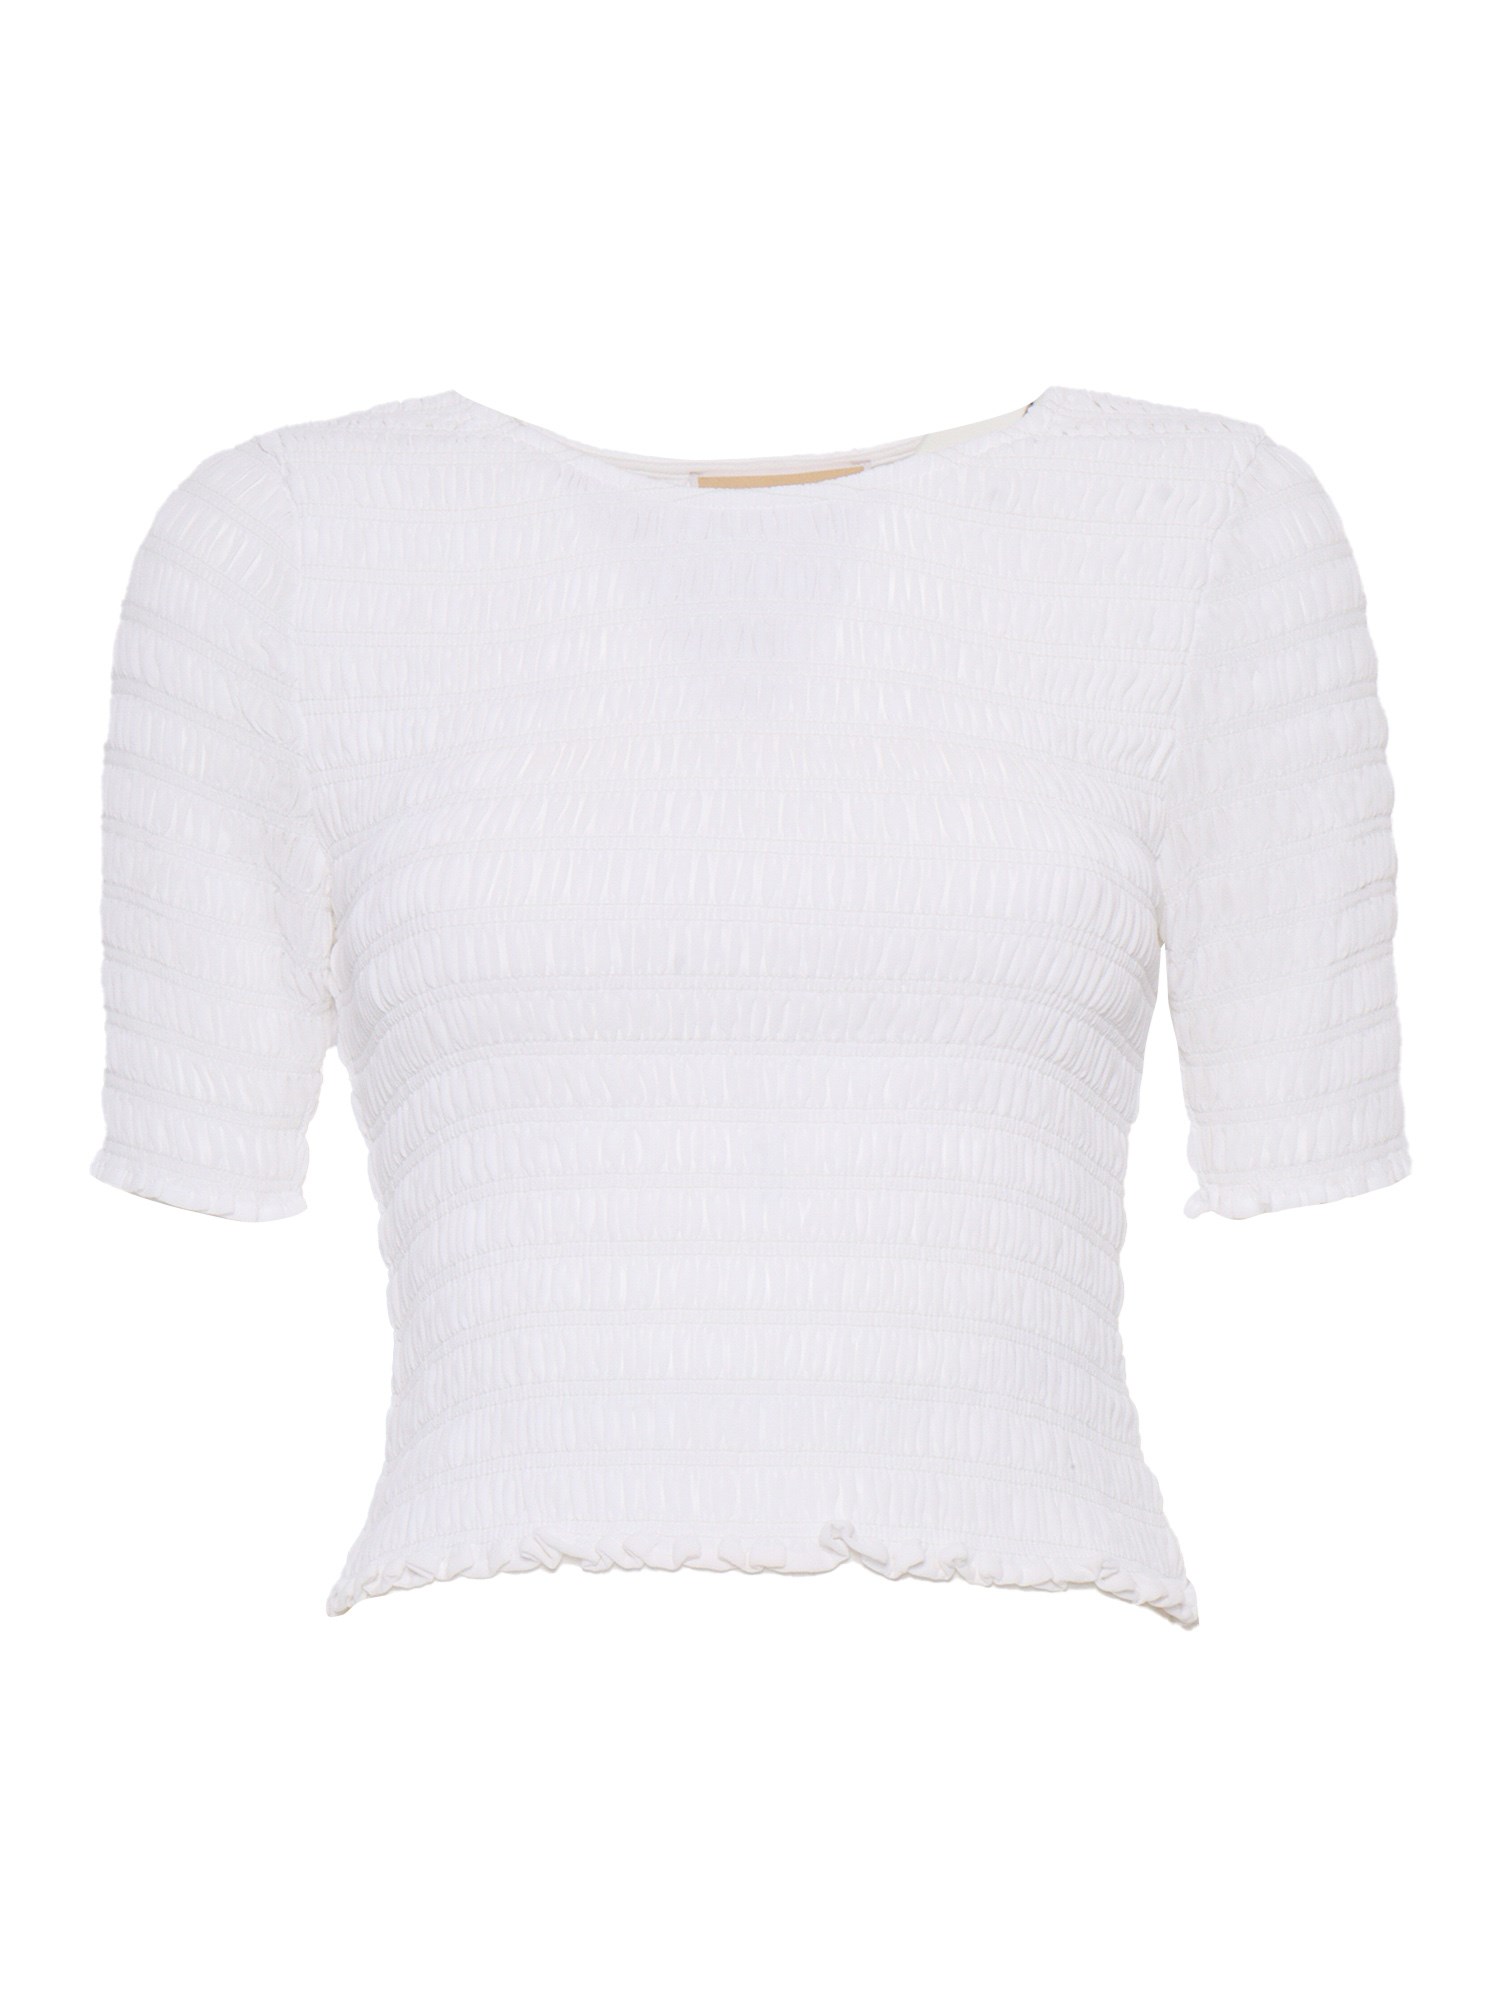 Michael Kors White Elastic Stretch T-shirt